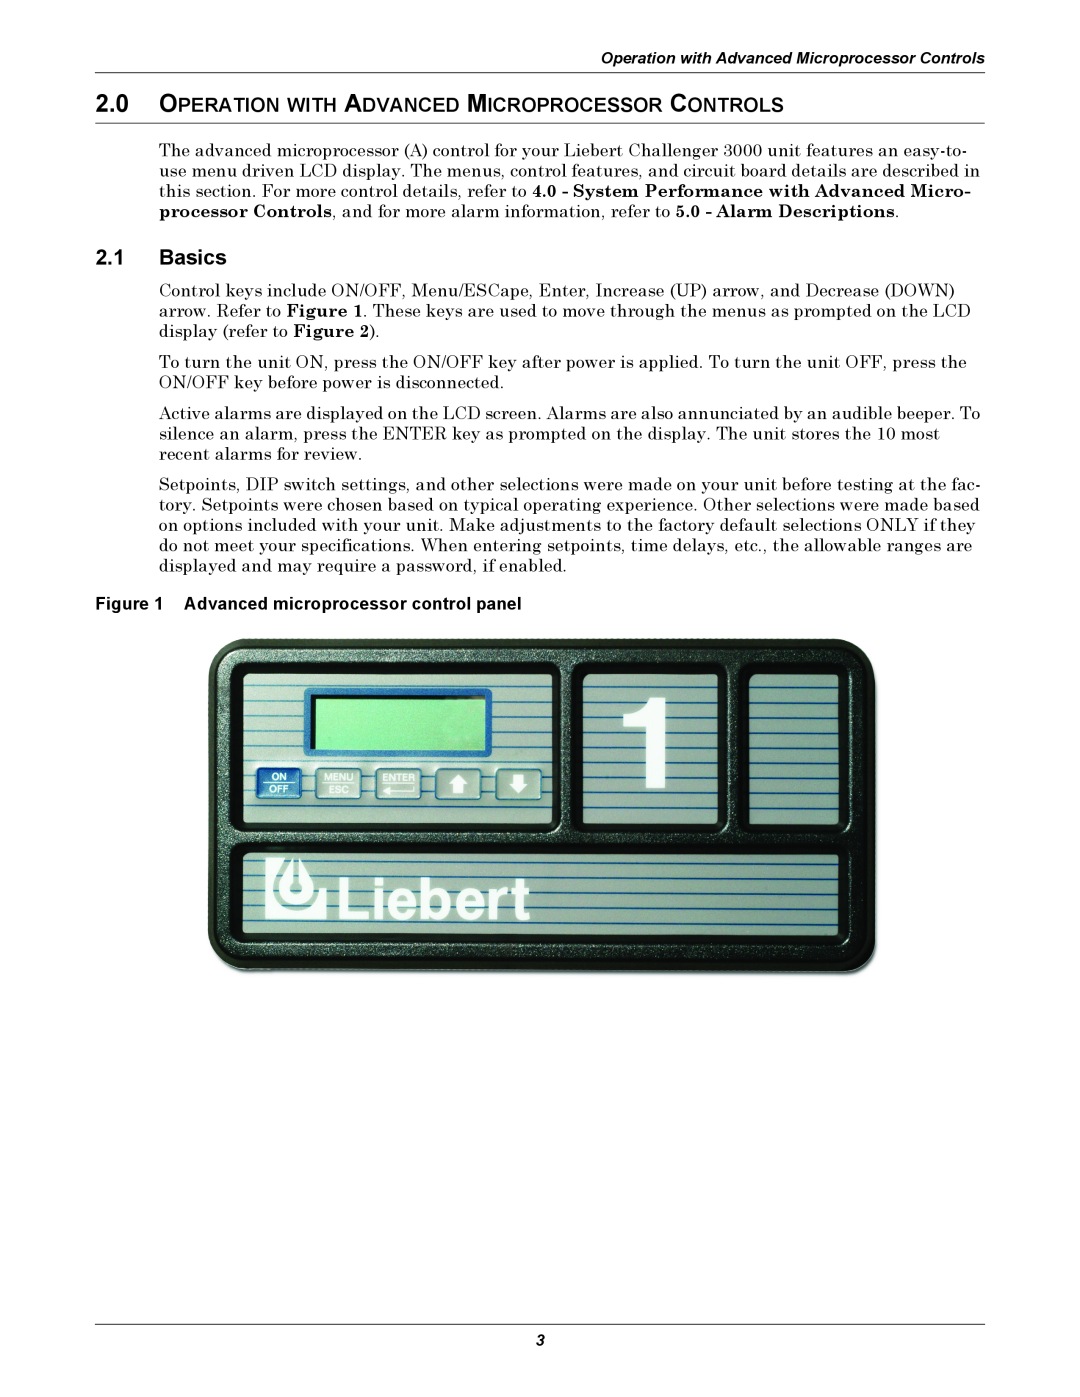 Liebert 3000 manual 2.1Basics, Advanced microprocessor control panel 